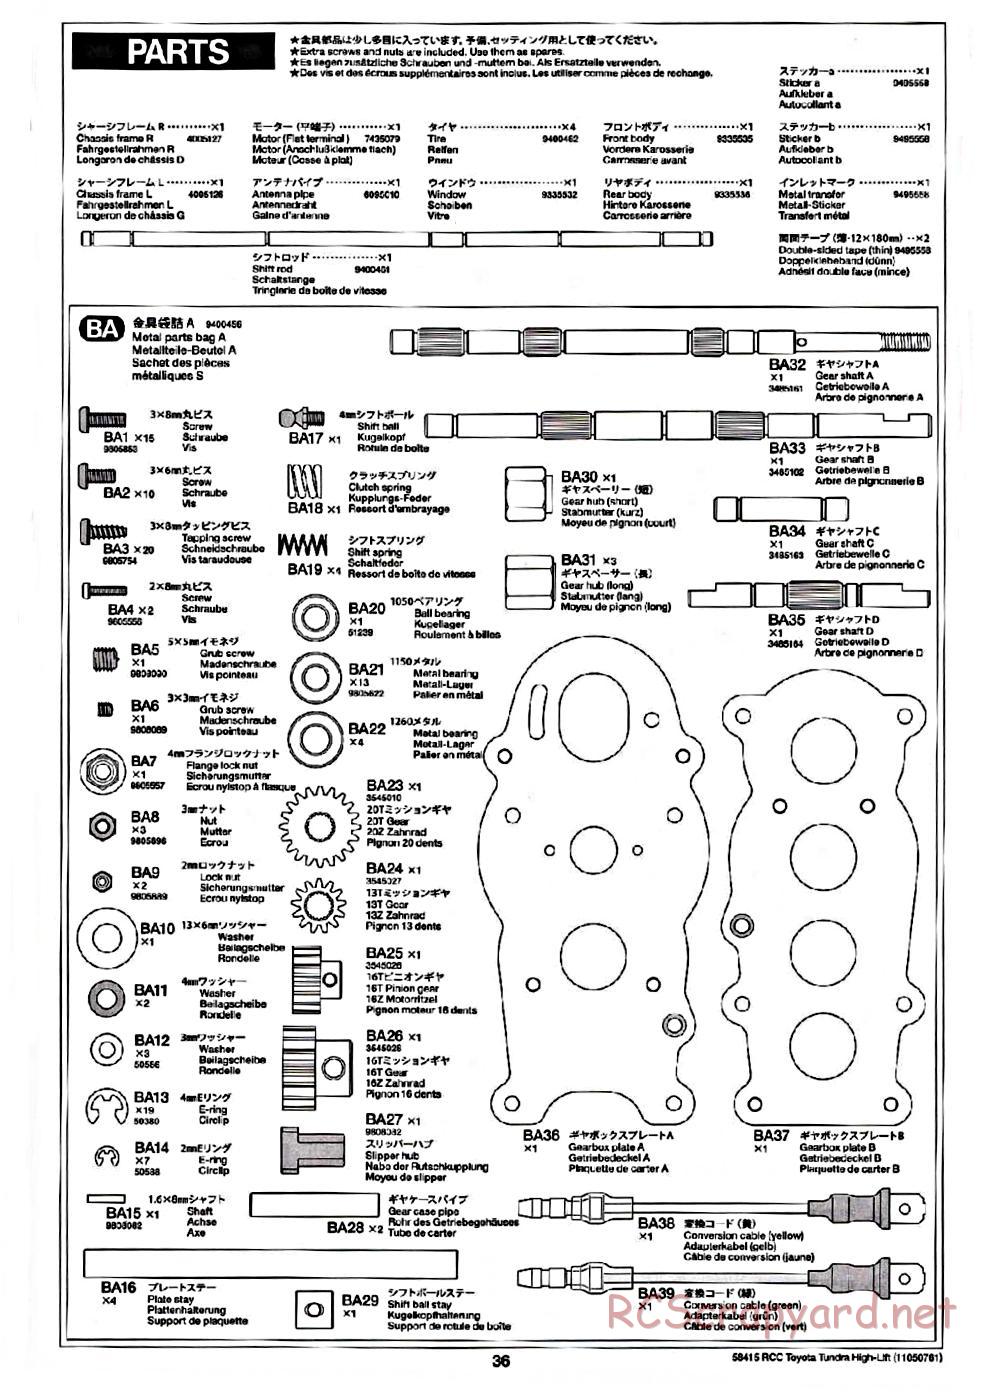 Tamiya - Toyota Tundra High-Lift Chassis - Manual - Page 36